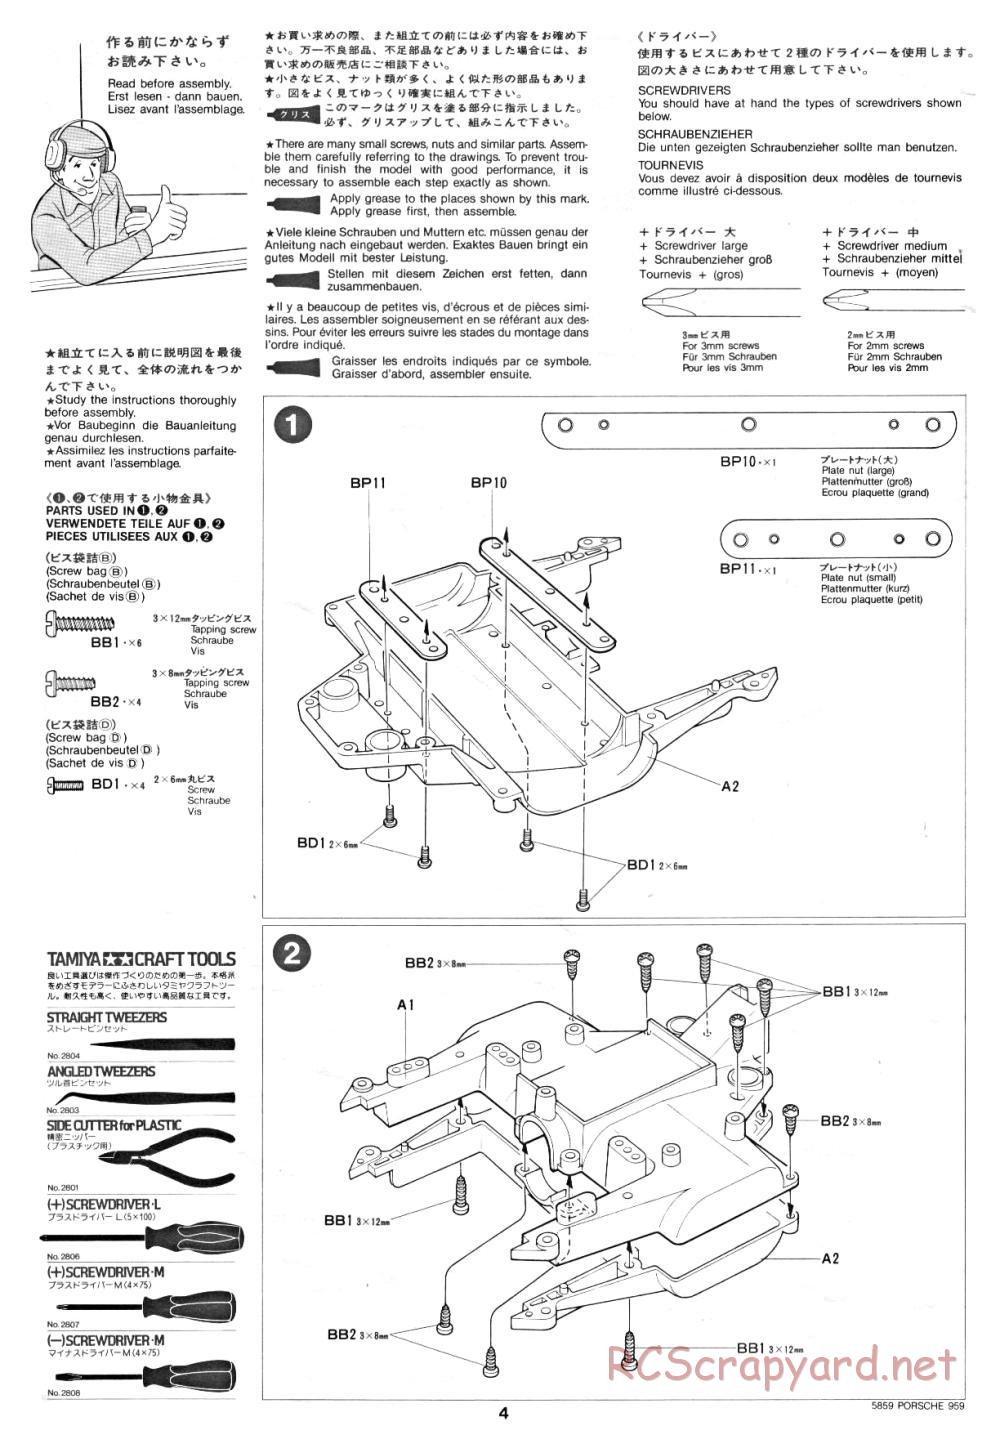 Tamiya - Porsche 959 - 58059 - Manual - Page 4